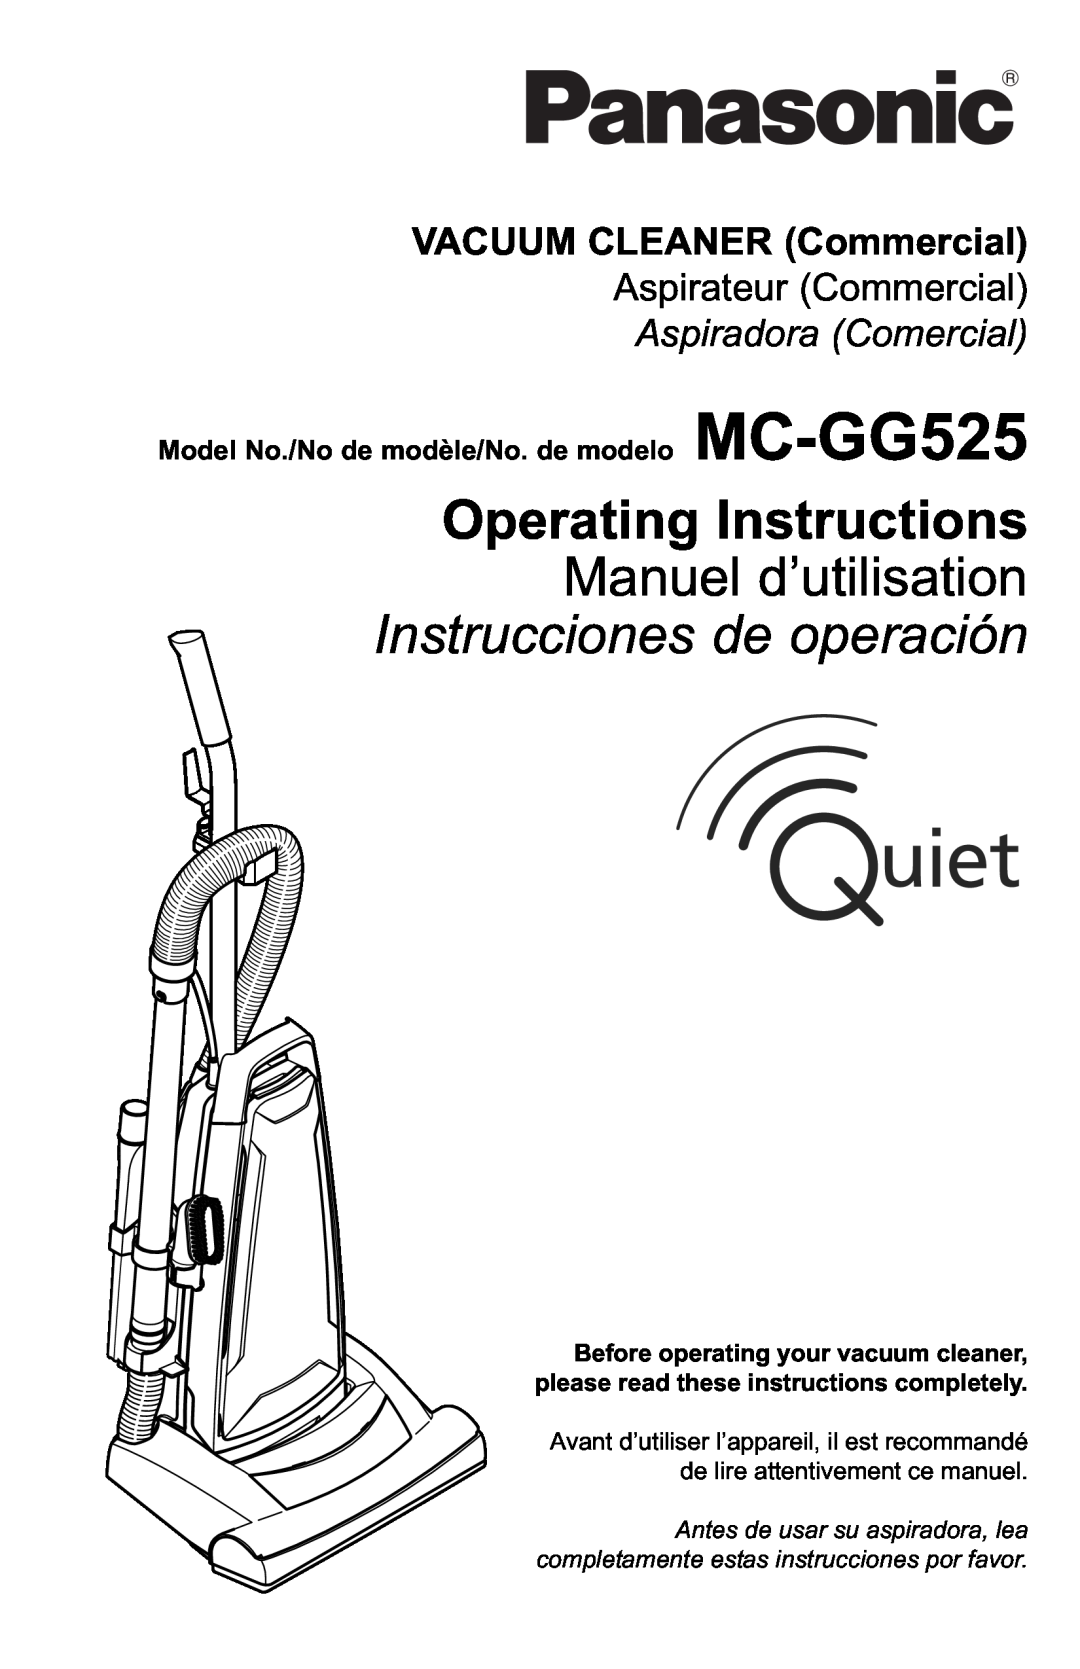 Panasonic MC-GG525 manuel dutilisation Operating Instructions, Manuel d’utilisation, Instrucciones de operación 